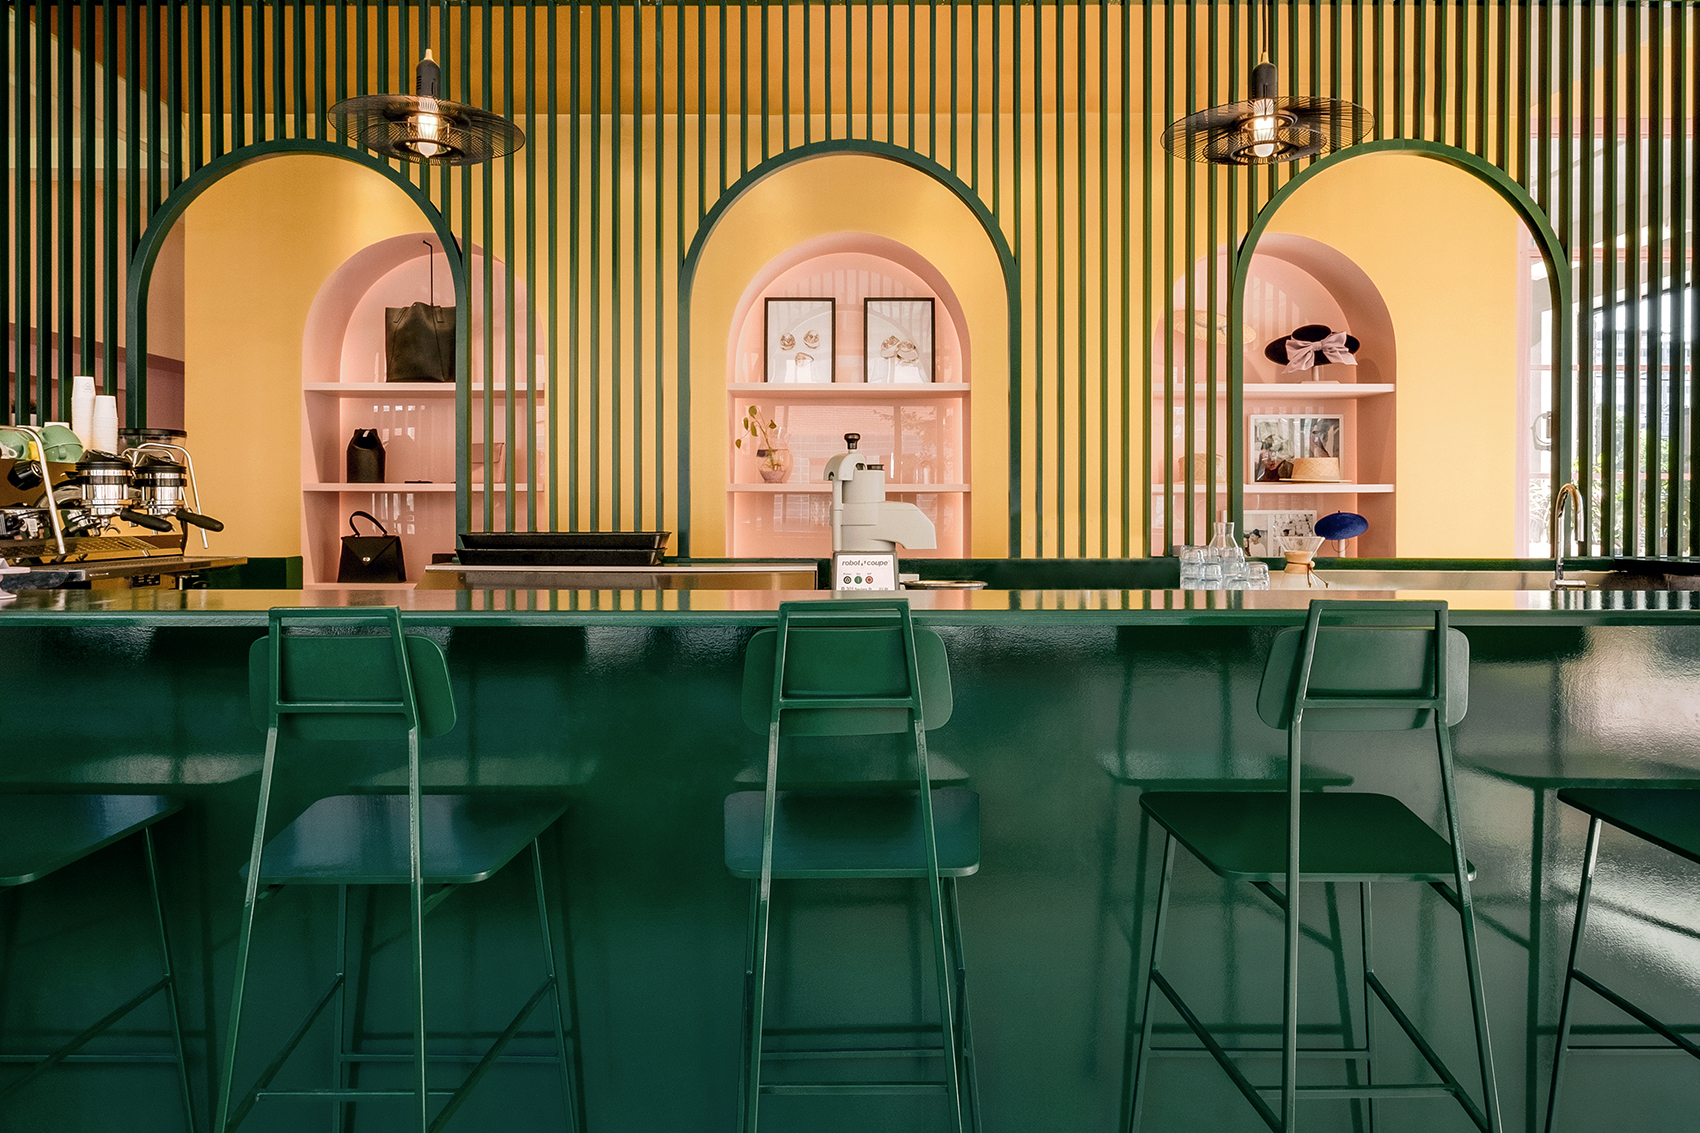 001-Pastel-Rita-cafe-boutique-APPAREIL-Architecture.jpg